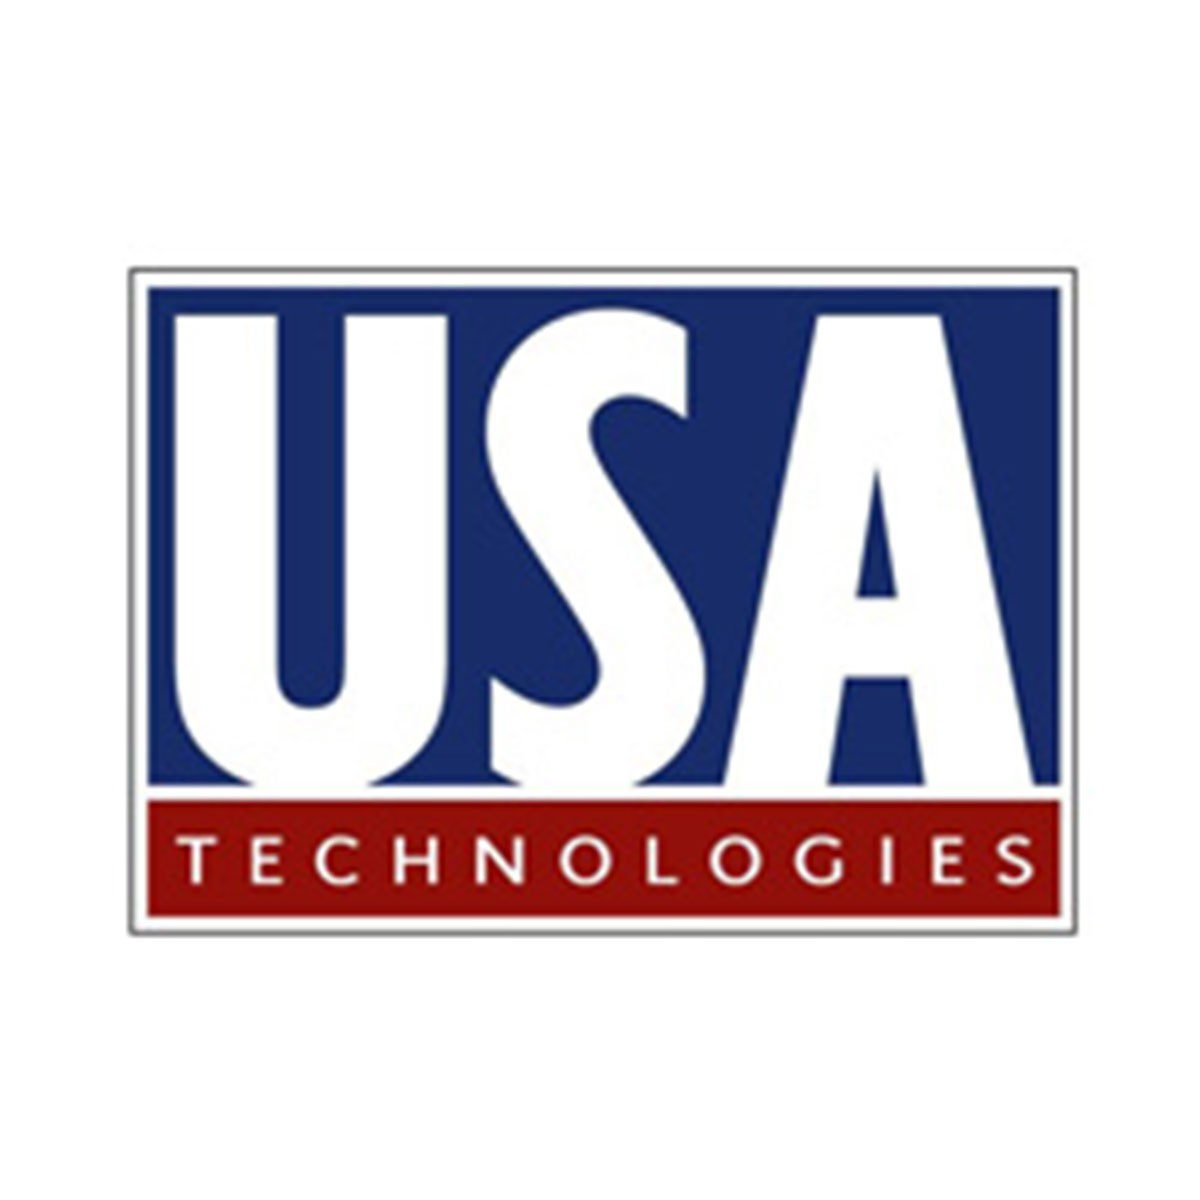 USA Technologies